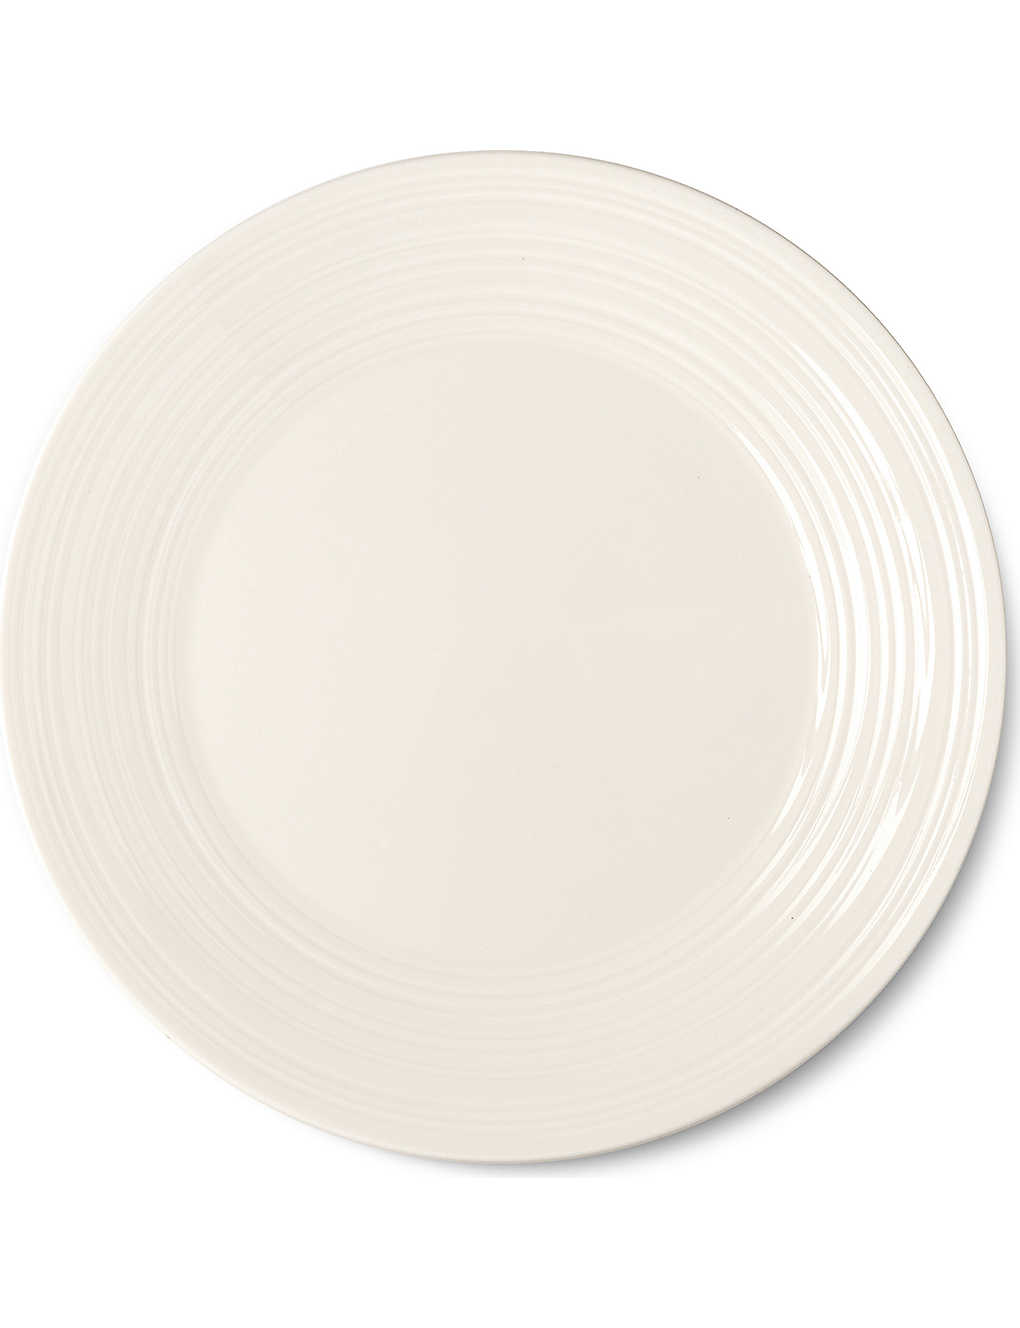 Wedgwood Jasper Conran White Embossed Strata Plates 20cm Set of 4 